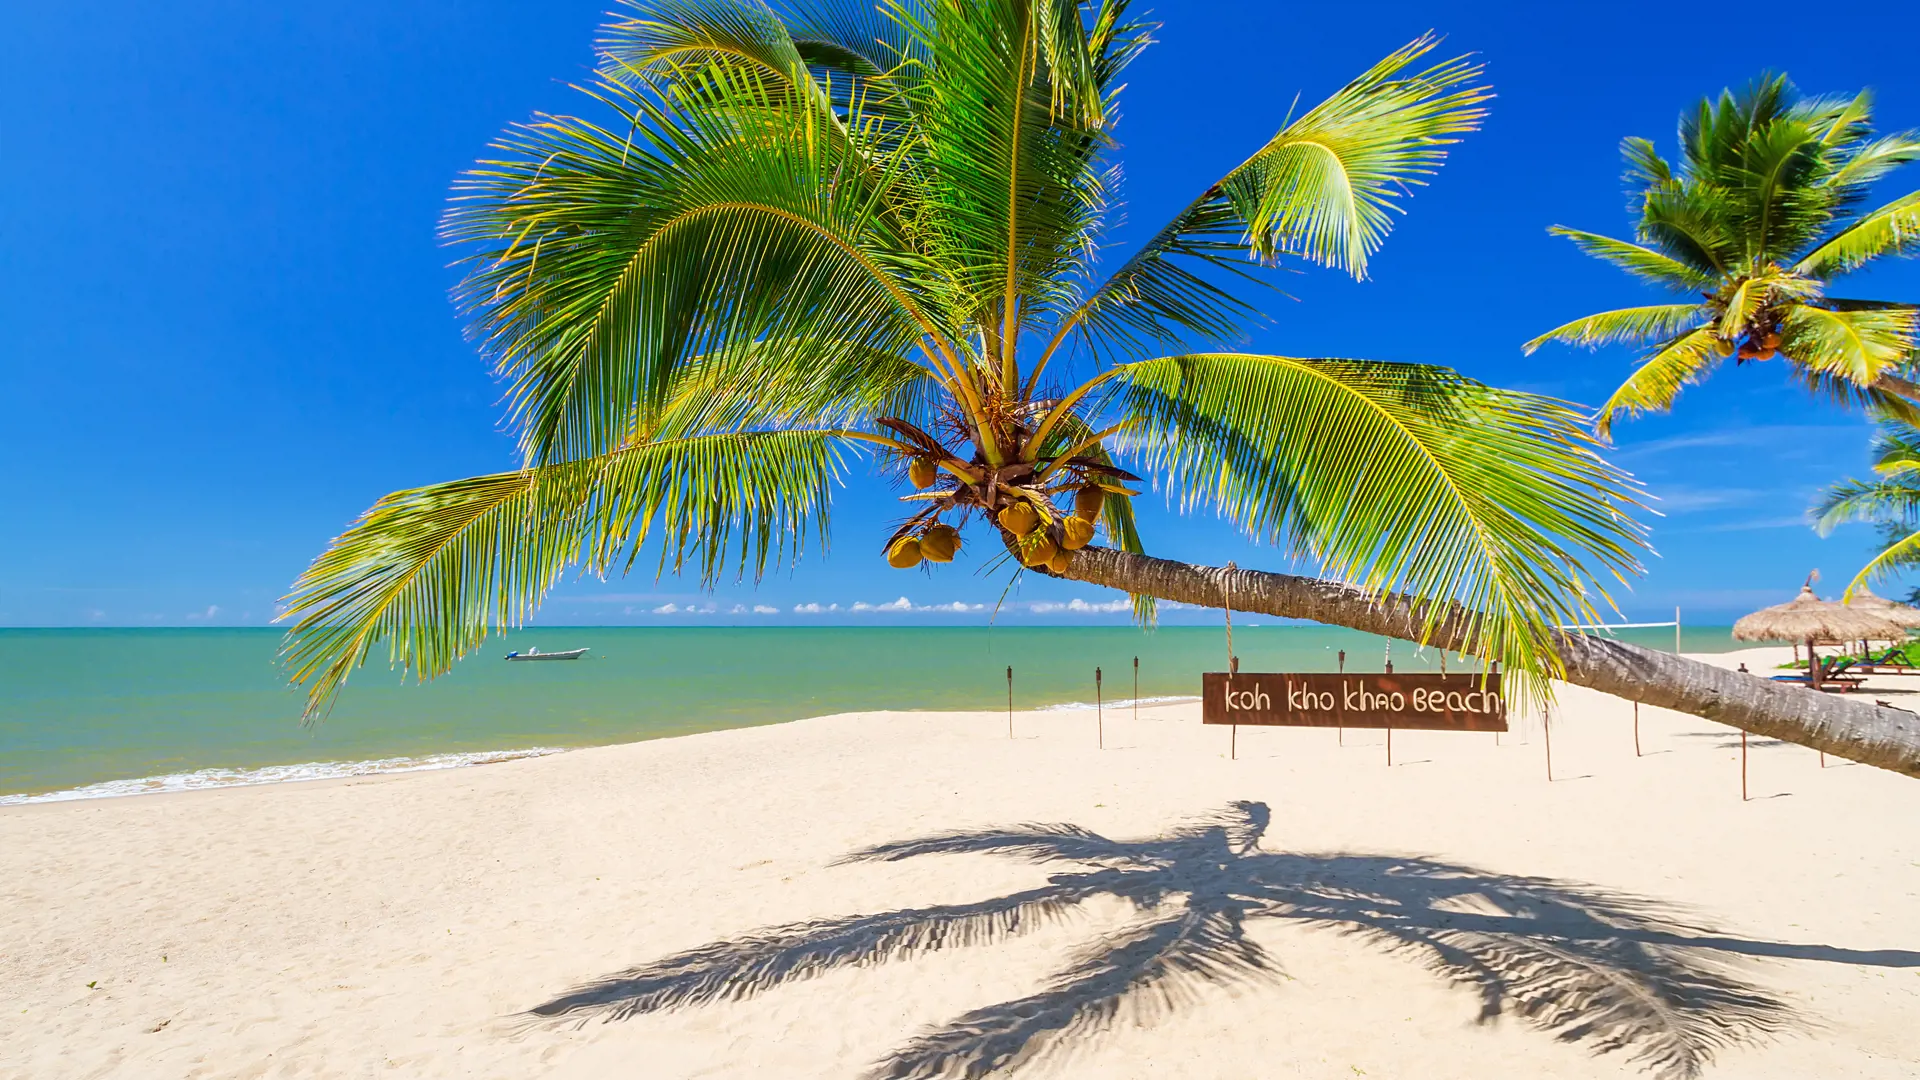 Tropical palm tree on the beach of Koh Kho Khao island, Thailand_142378144.jpg